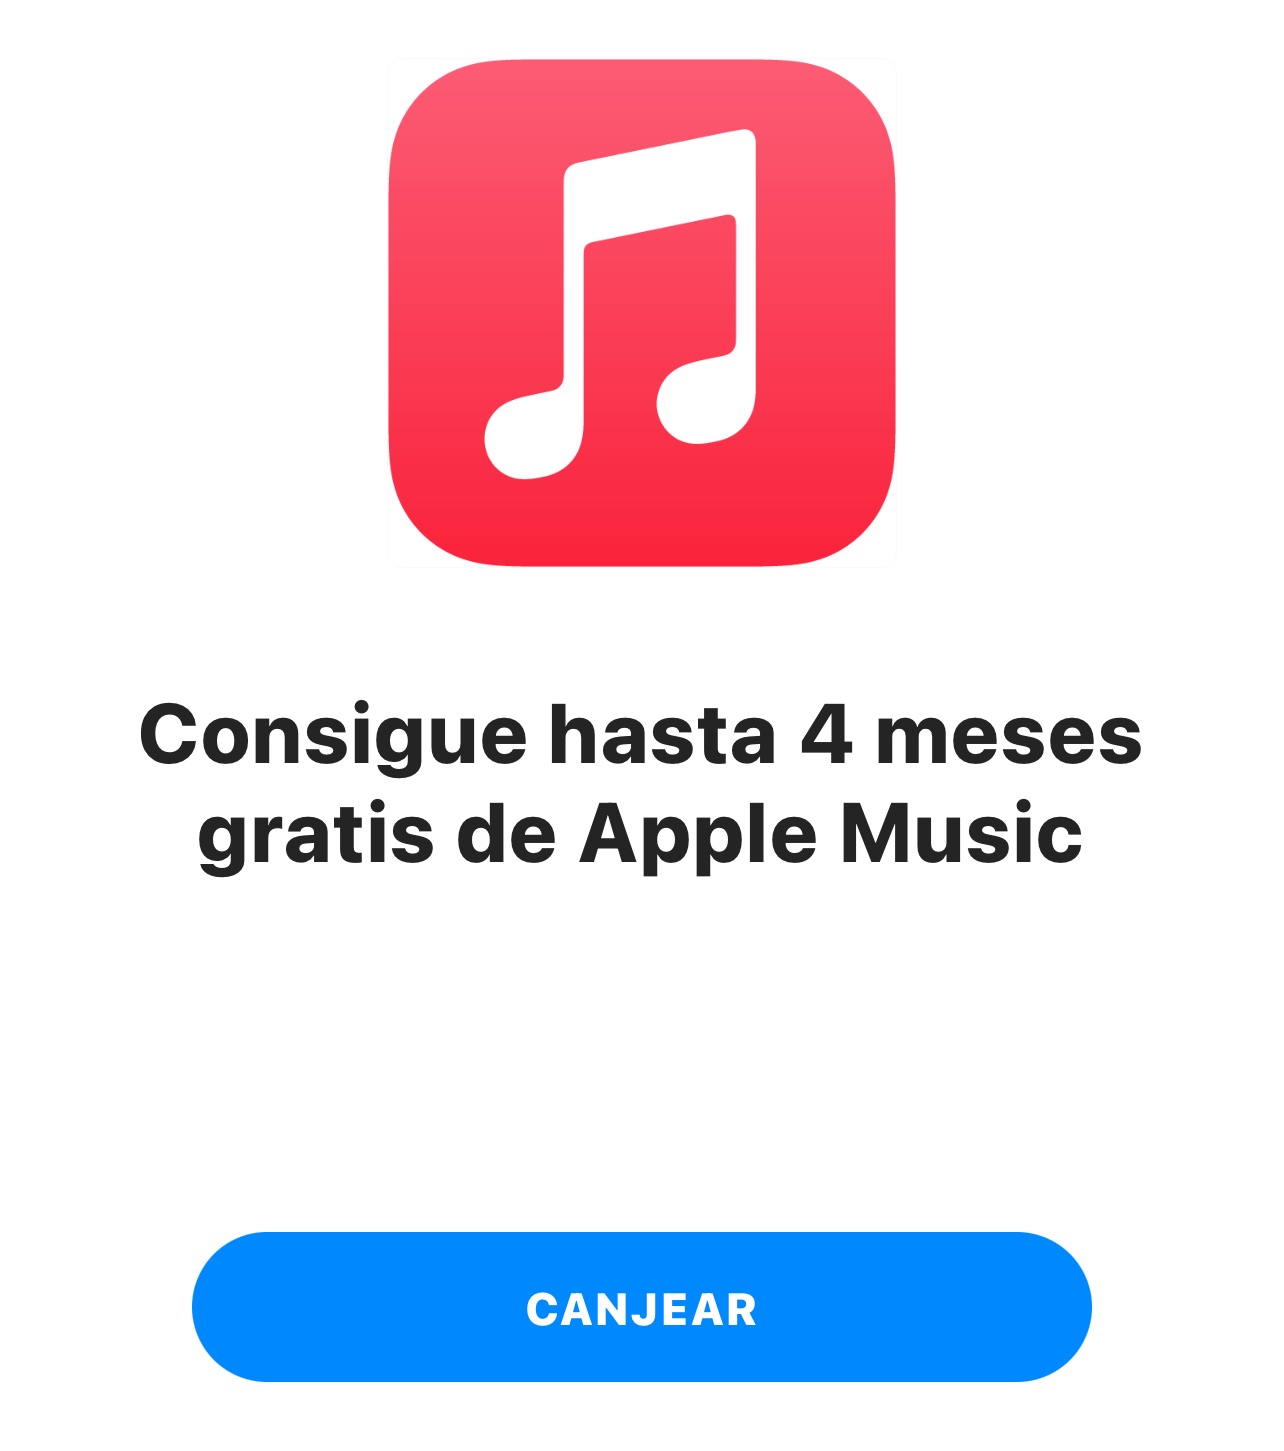 1 ó 4 meses gratis Apple Music » Chollometro